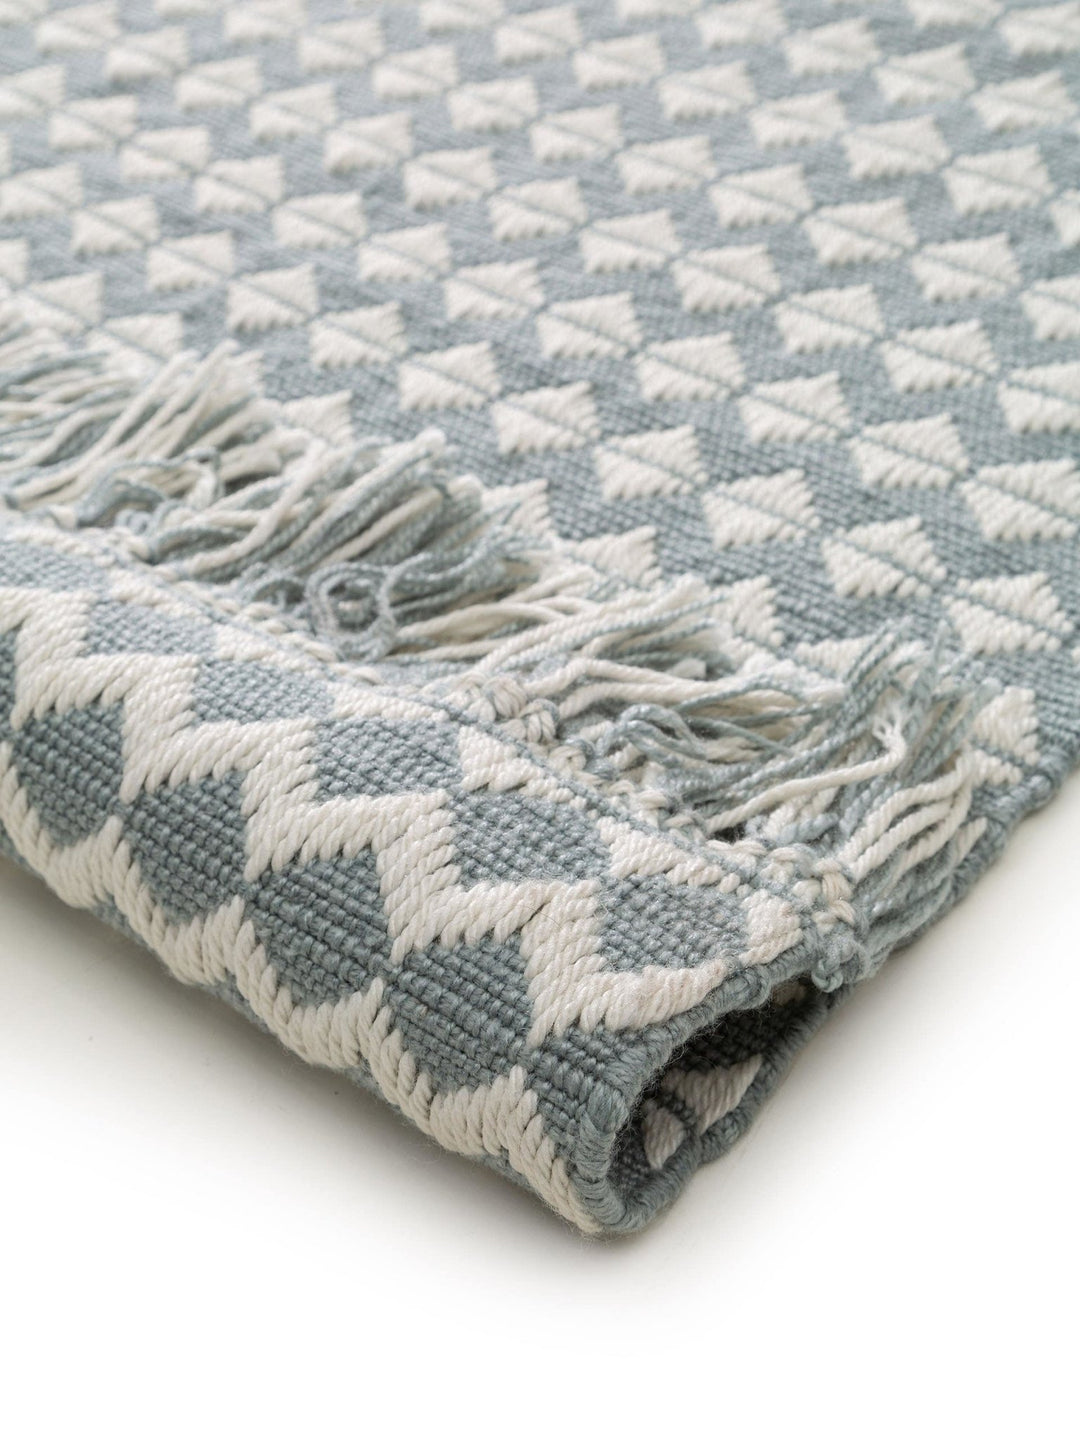 Teppich aus recyceltem Material Morty Blau - benuta PLUS - RugDreams®